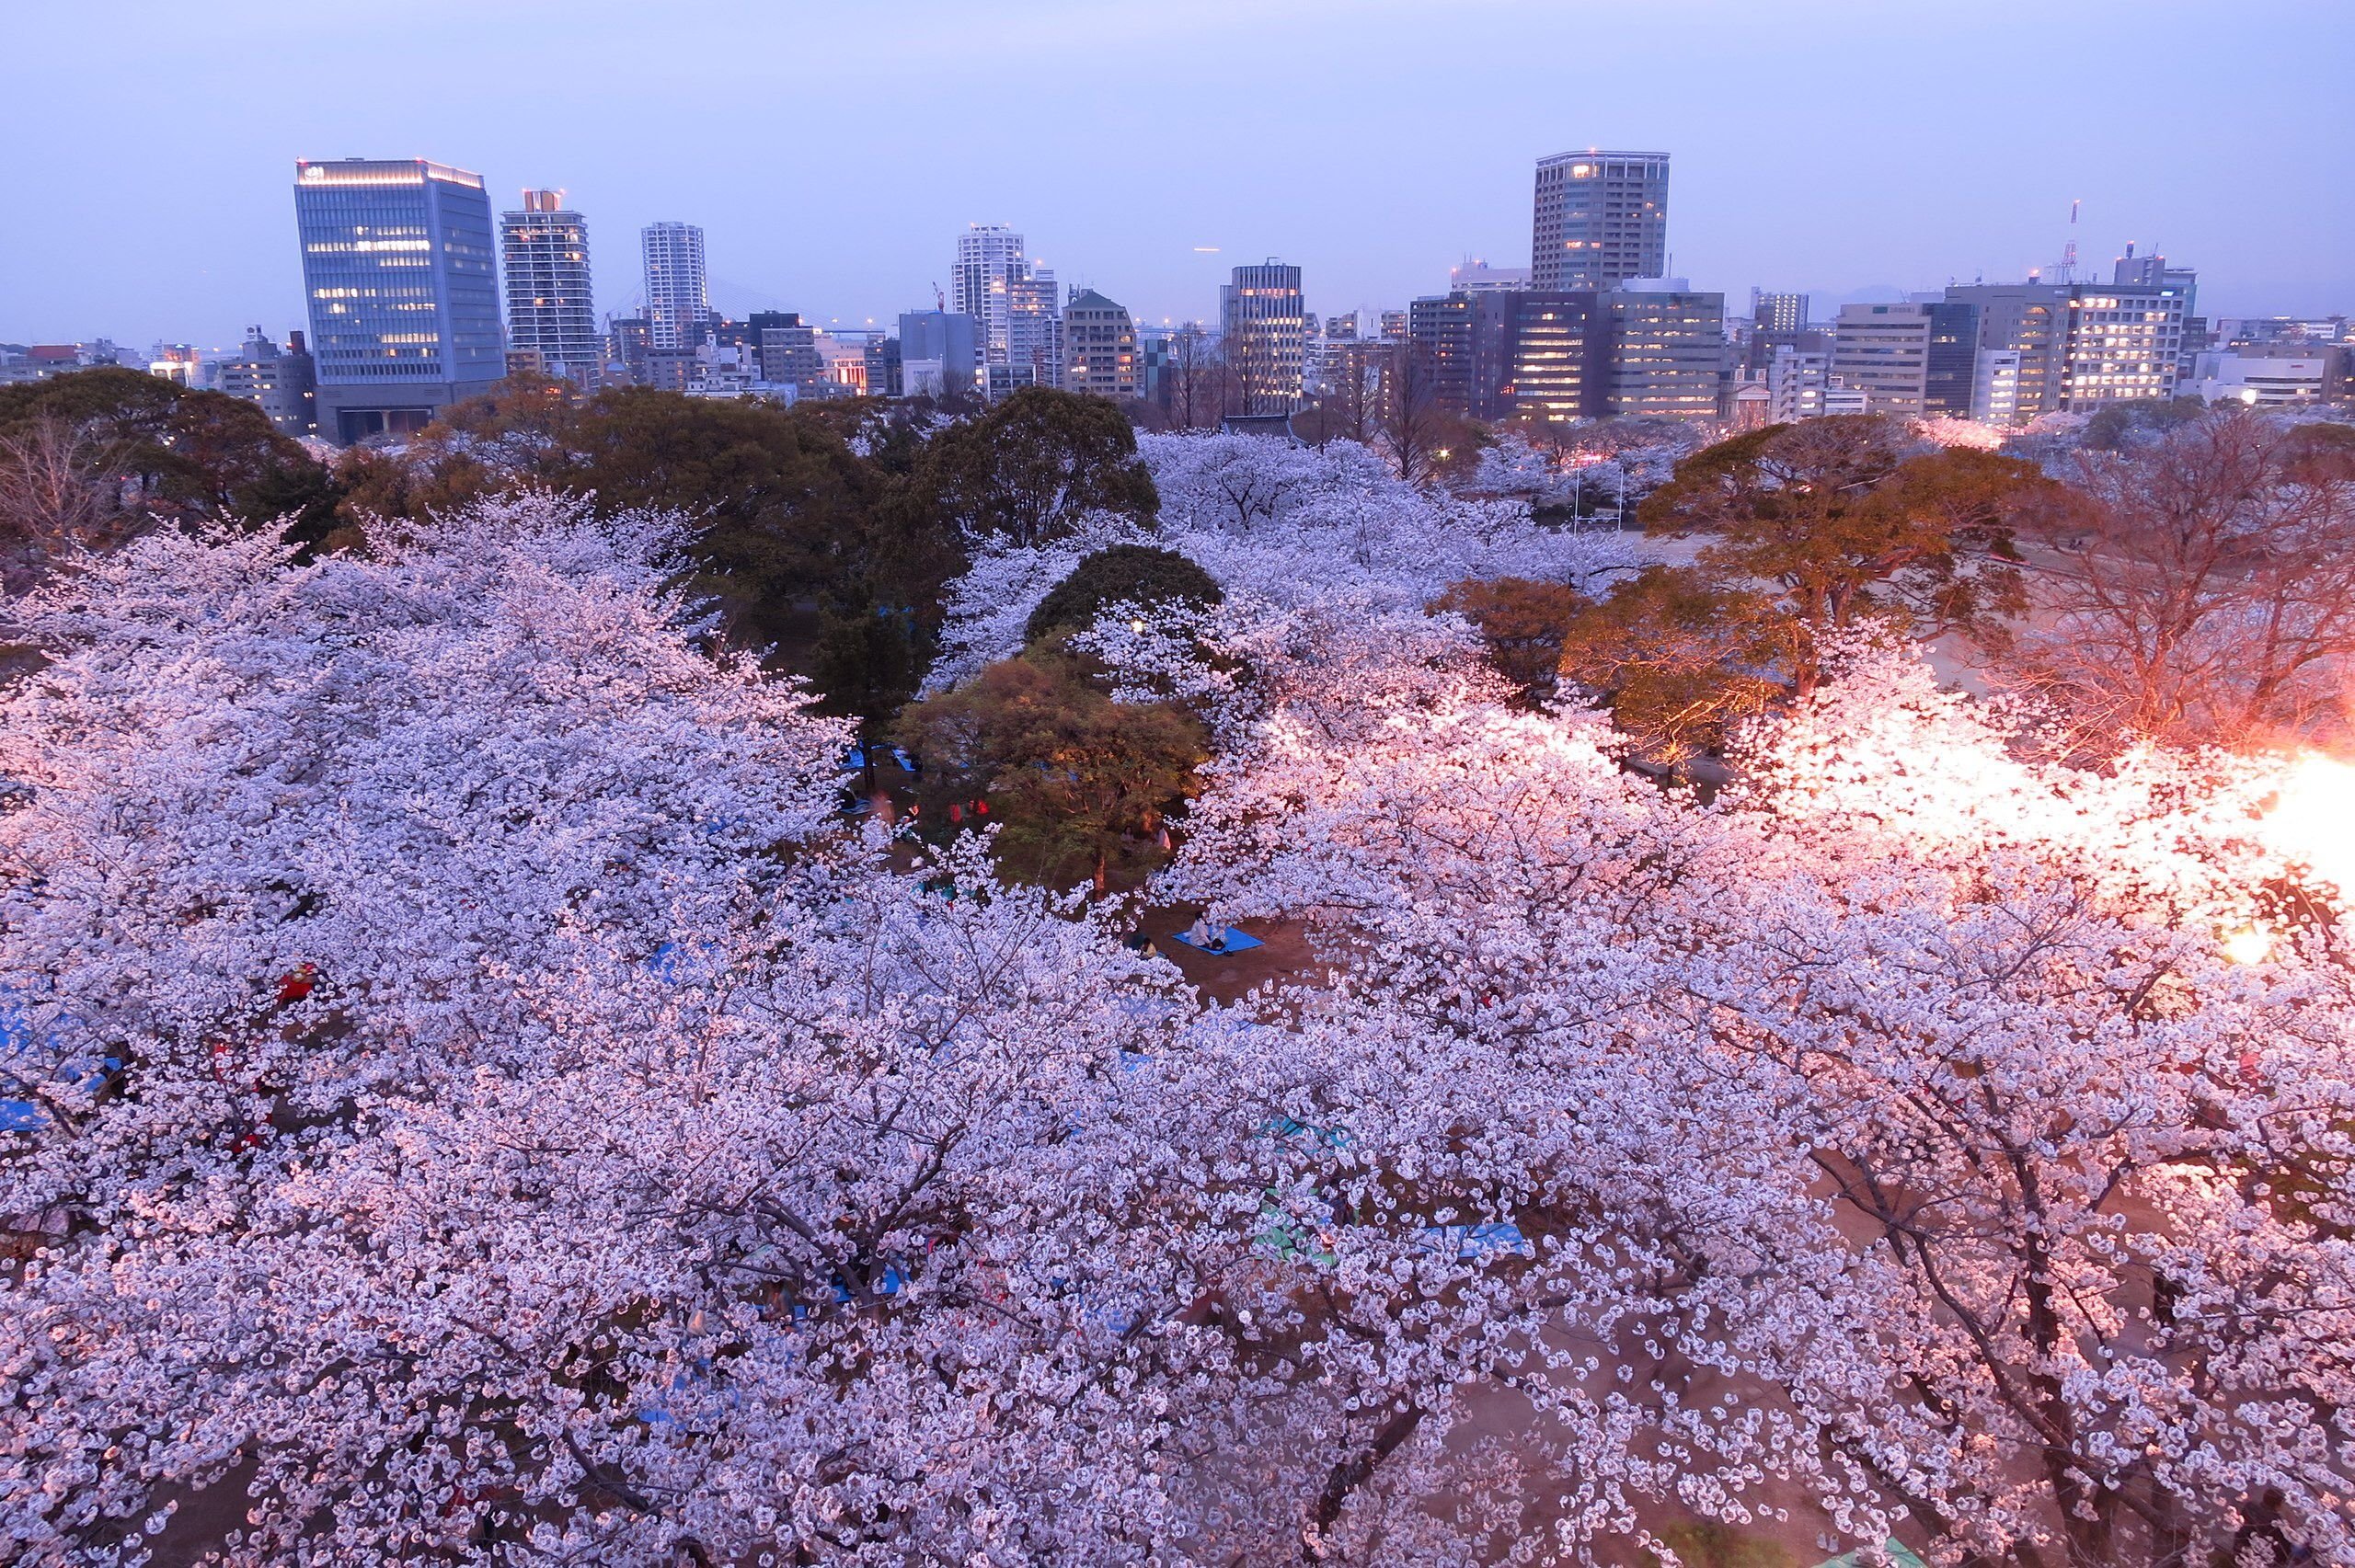 Japanese blossom